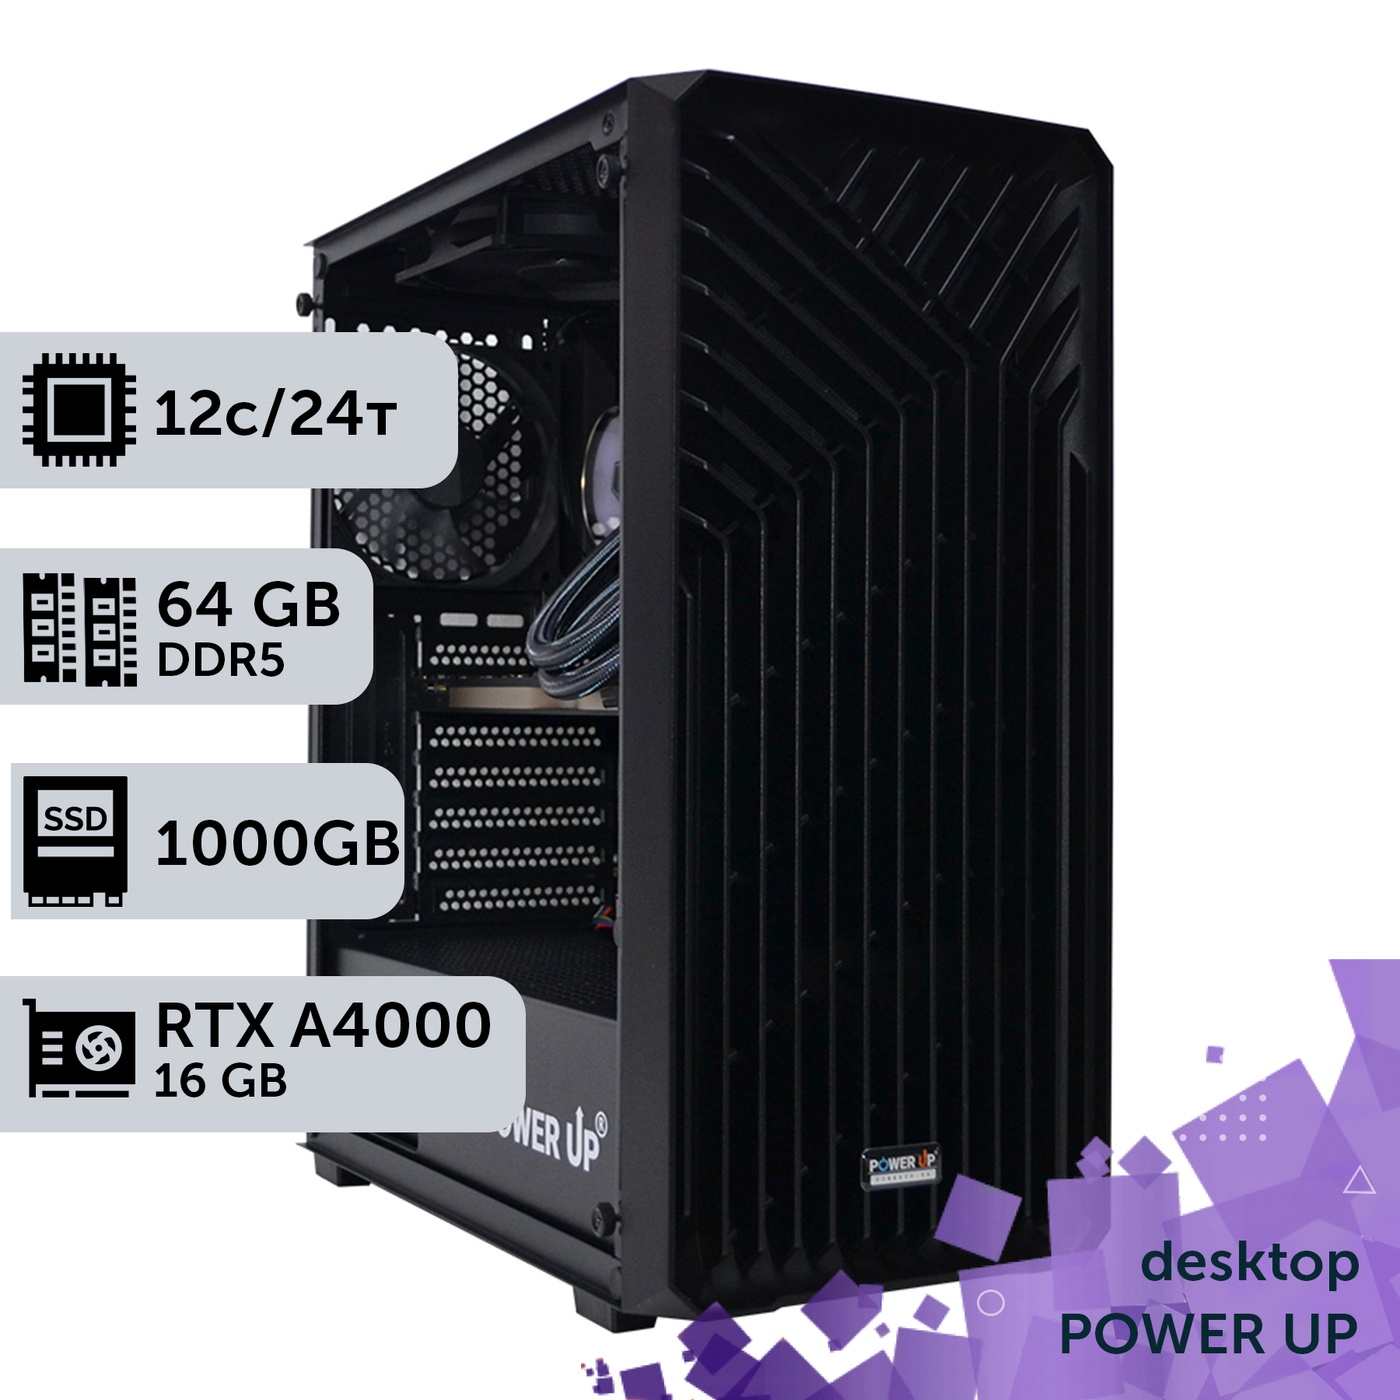 Рабочая станция PowerUp Desktop #268 Ryzen 9 7900x/64 GB/SSD 1TB/NVIDIA Quadro RTX A4000 16GB